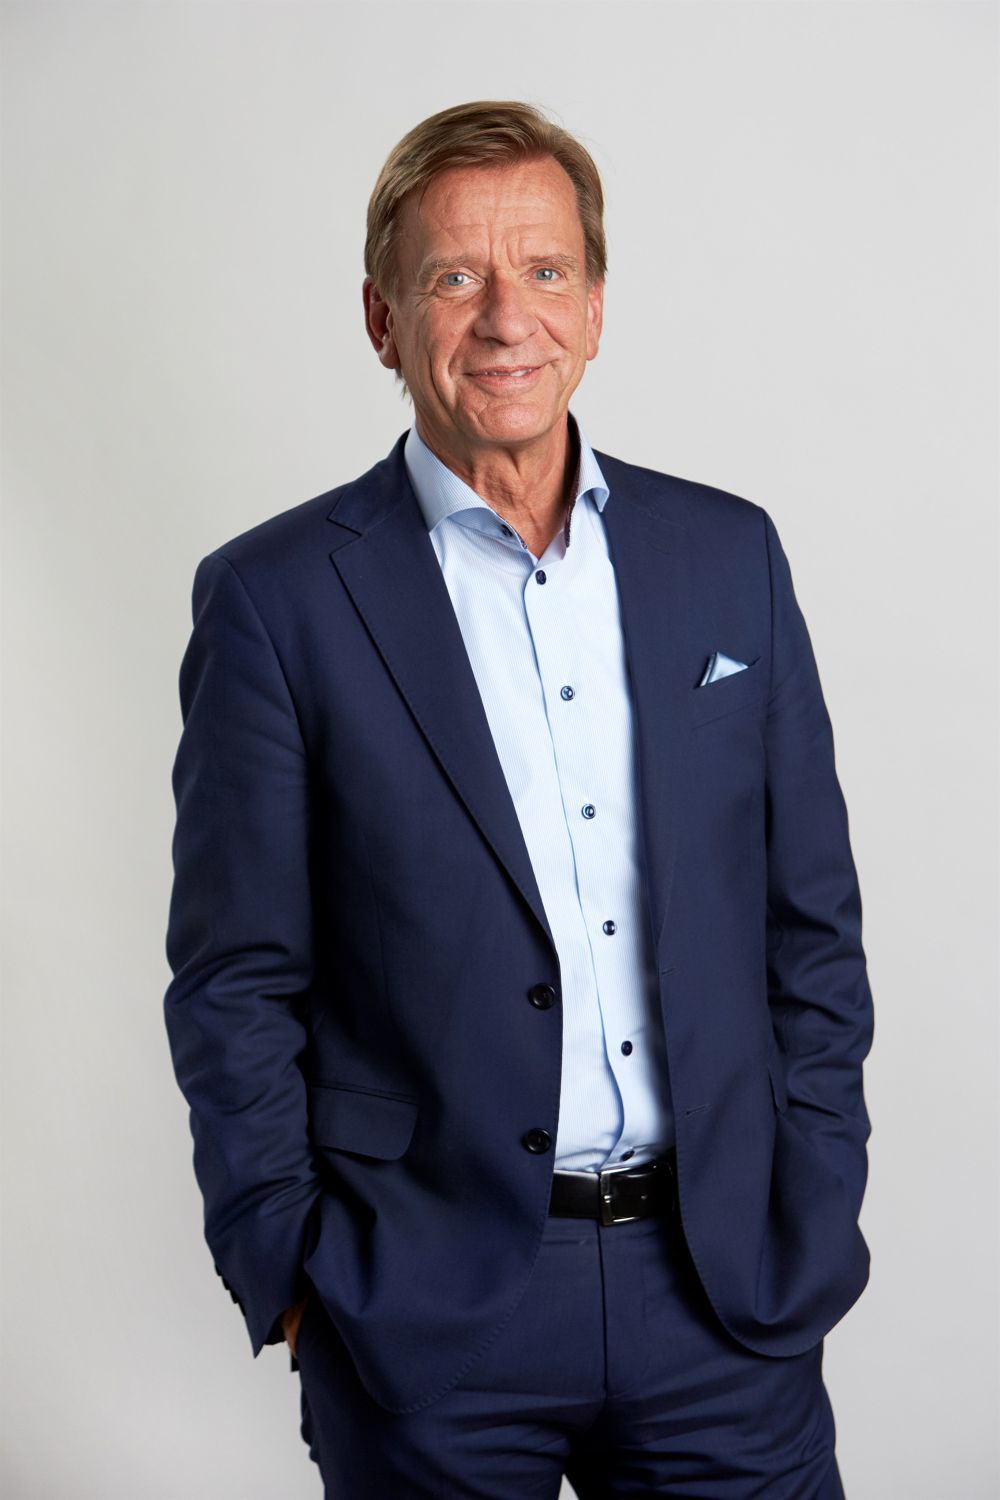 Hkan Samuelsson, CEO de Volvo.